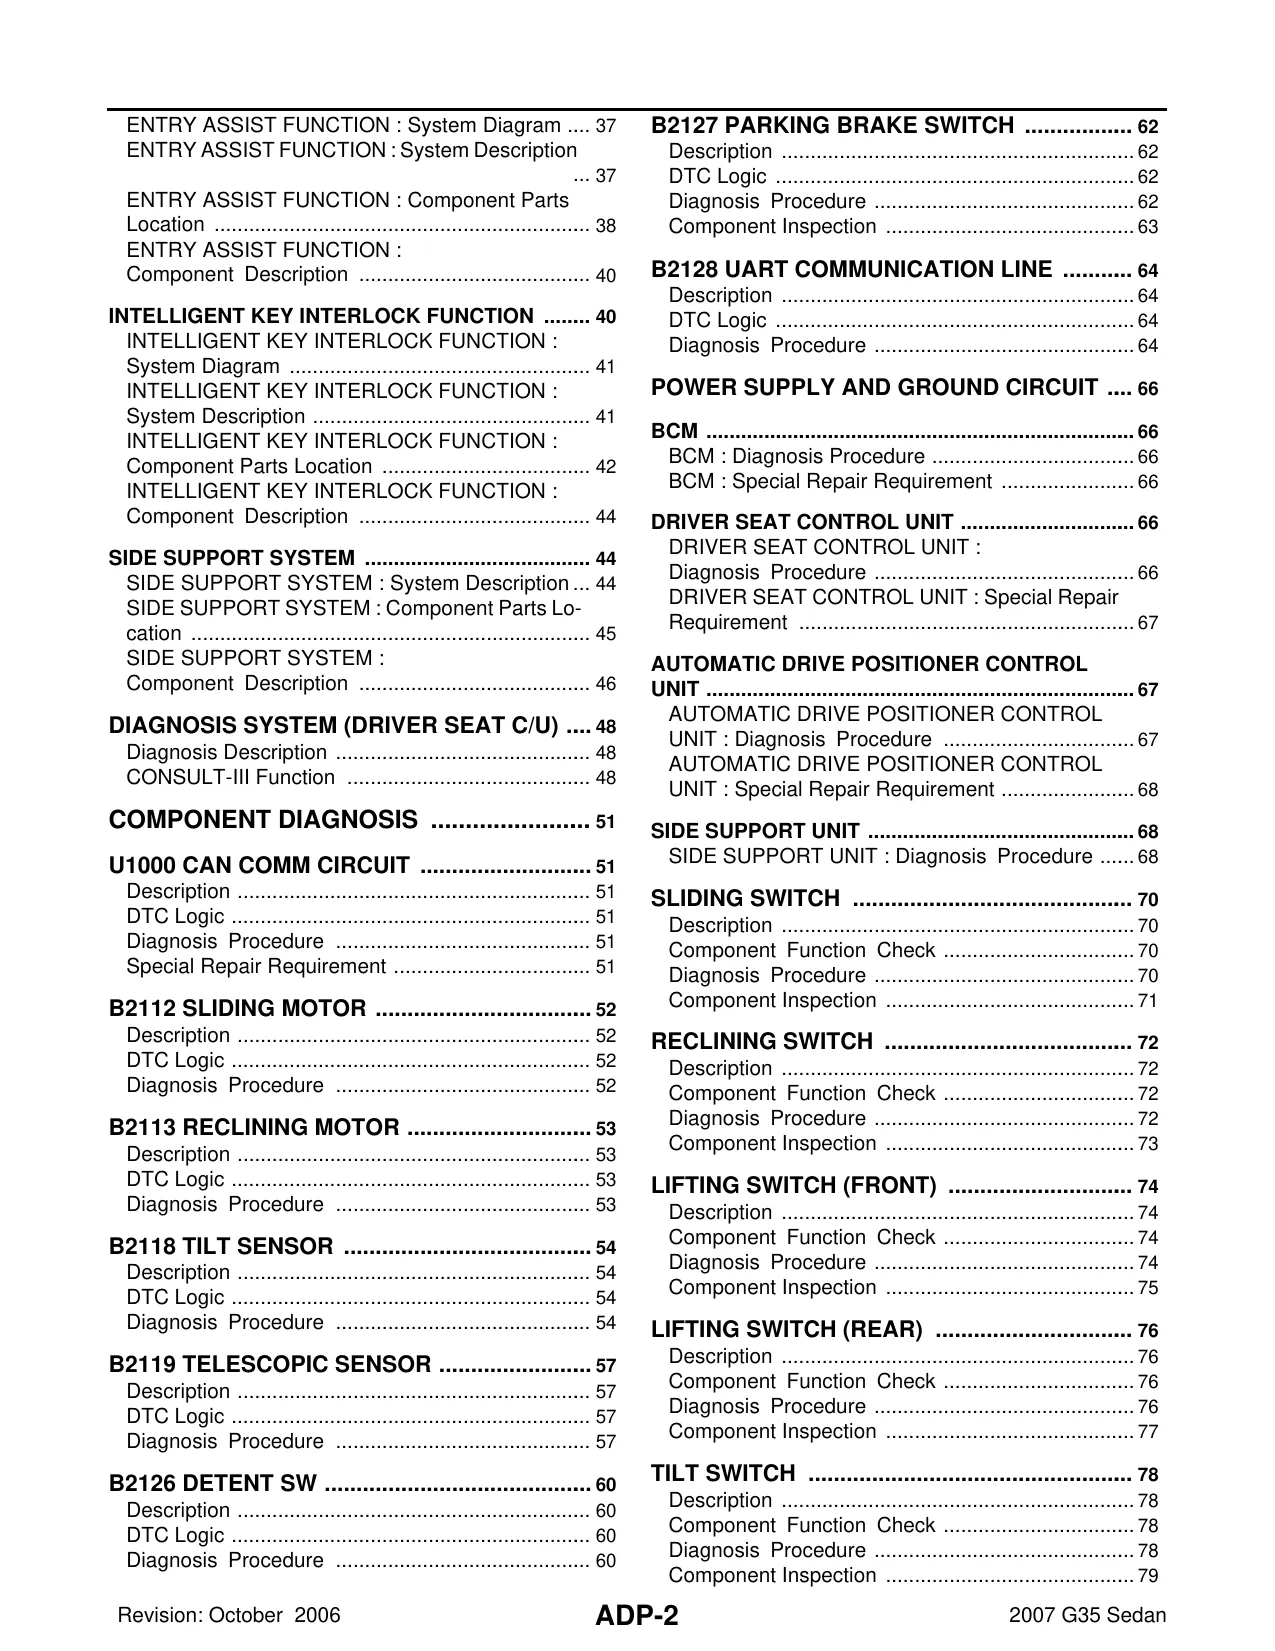 2007 Infiniti G35 Sedan Automatic Drive Positioner manual Preview image 2